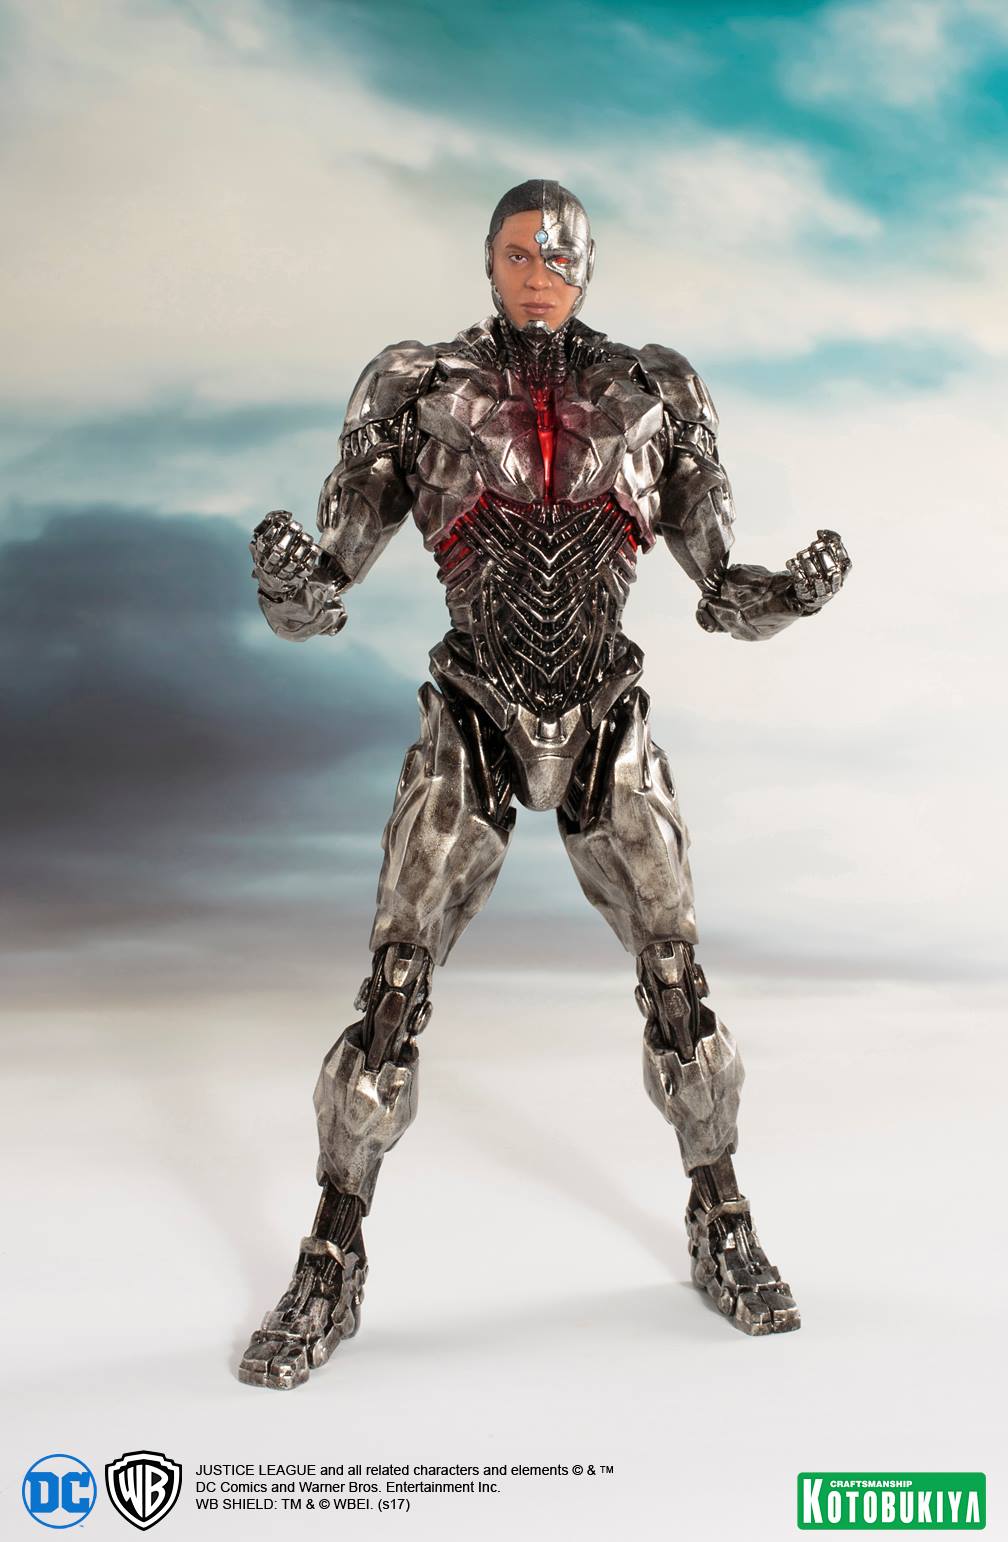 Kotobukiya DC Comics Justice League ARTFX+ Cyborg Statue - 0